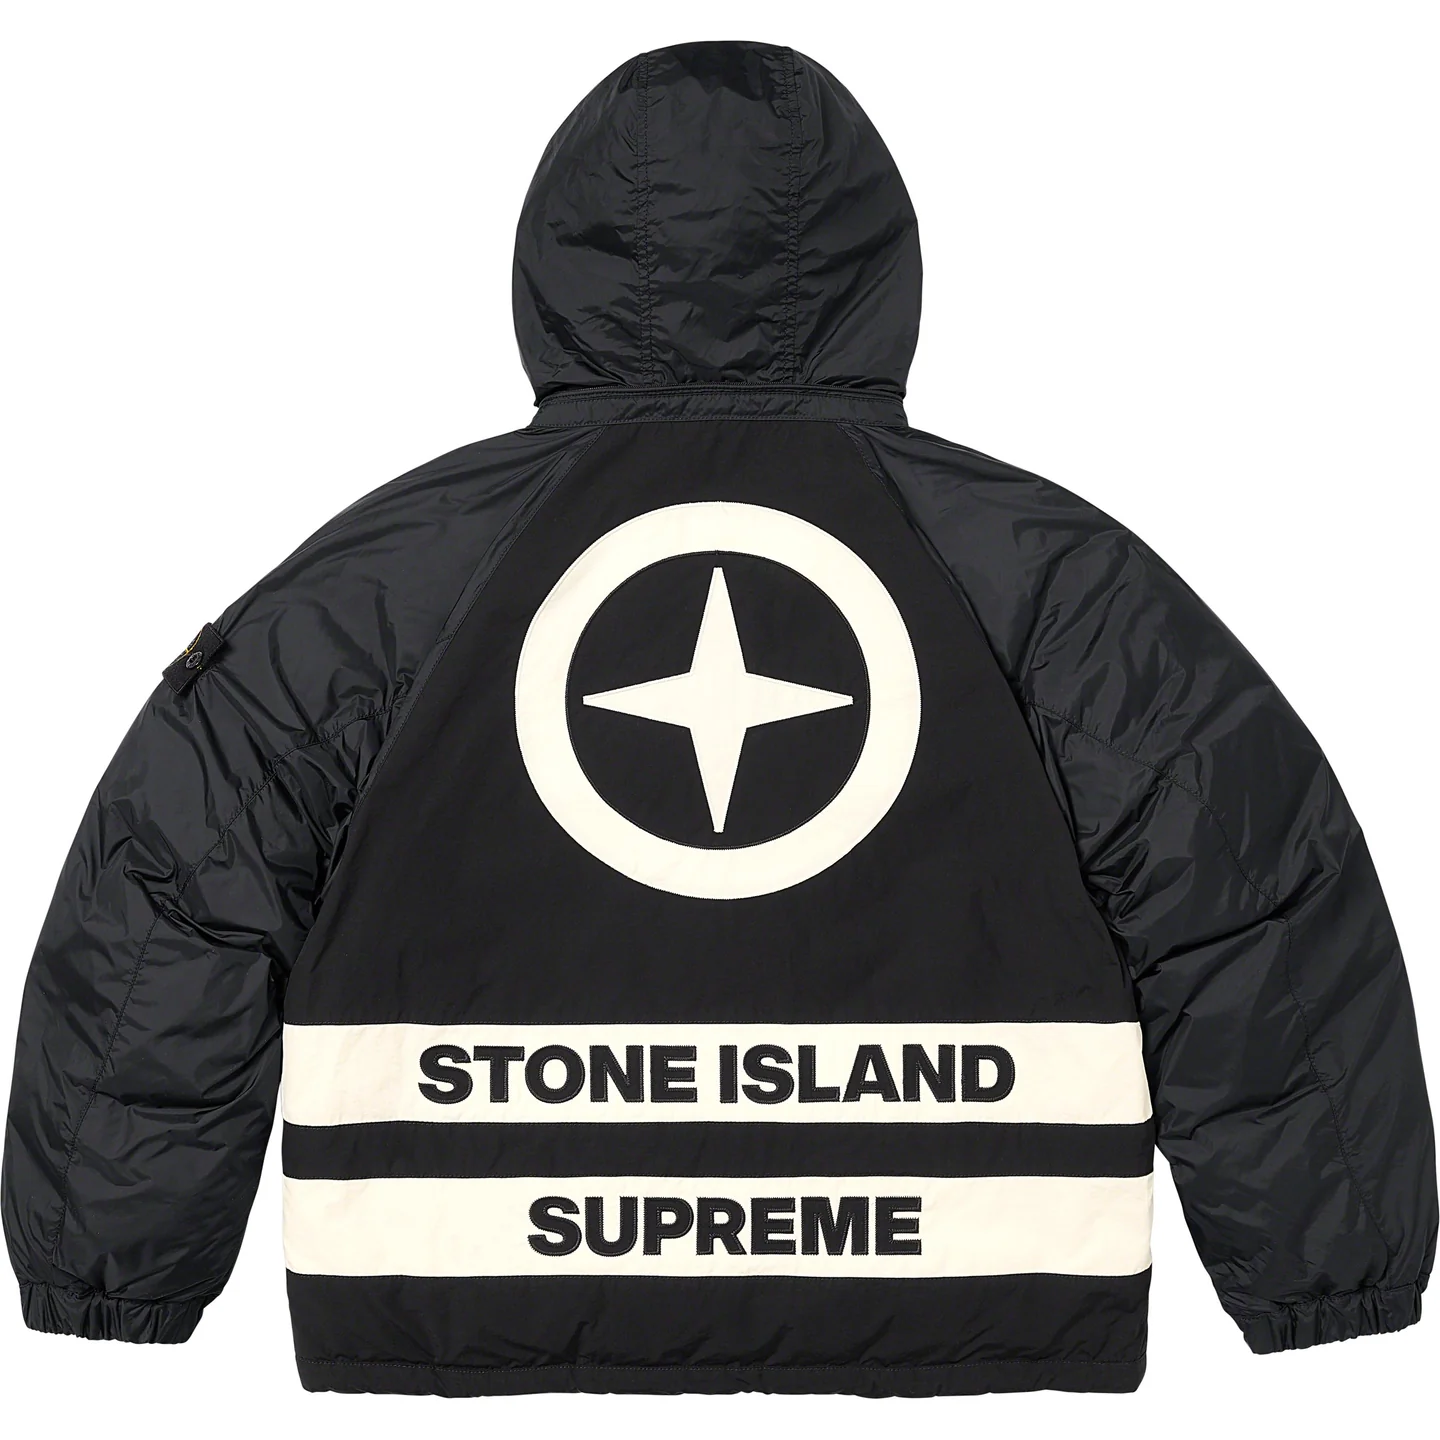 Supreme Supreme®/Stone Island® Reversible Down Puffer Jacket